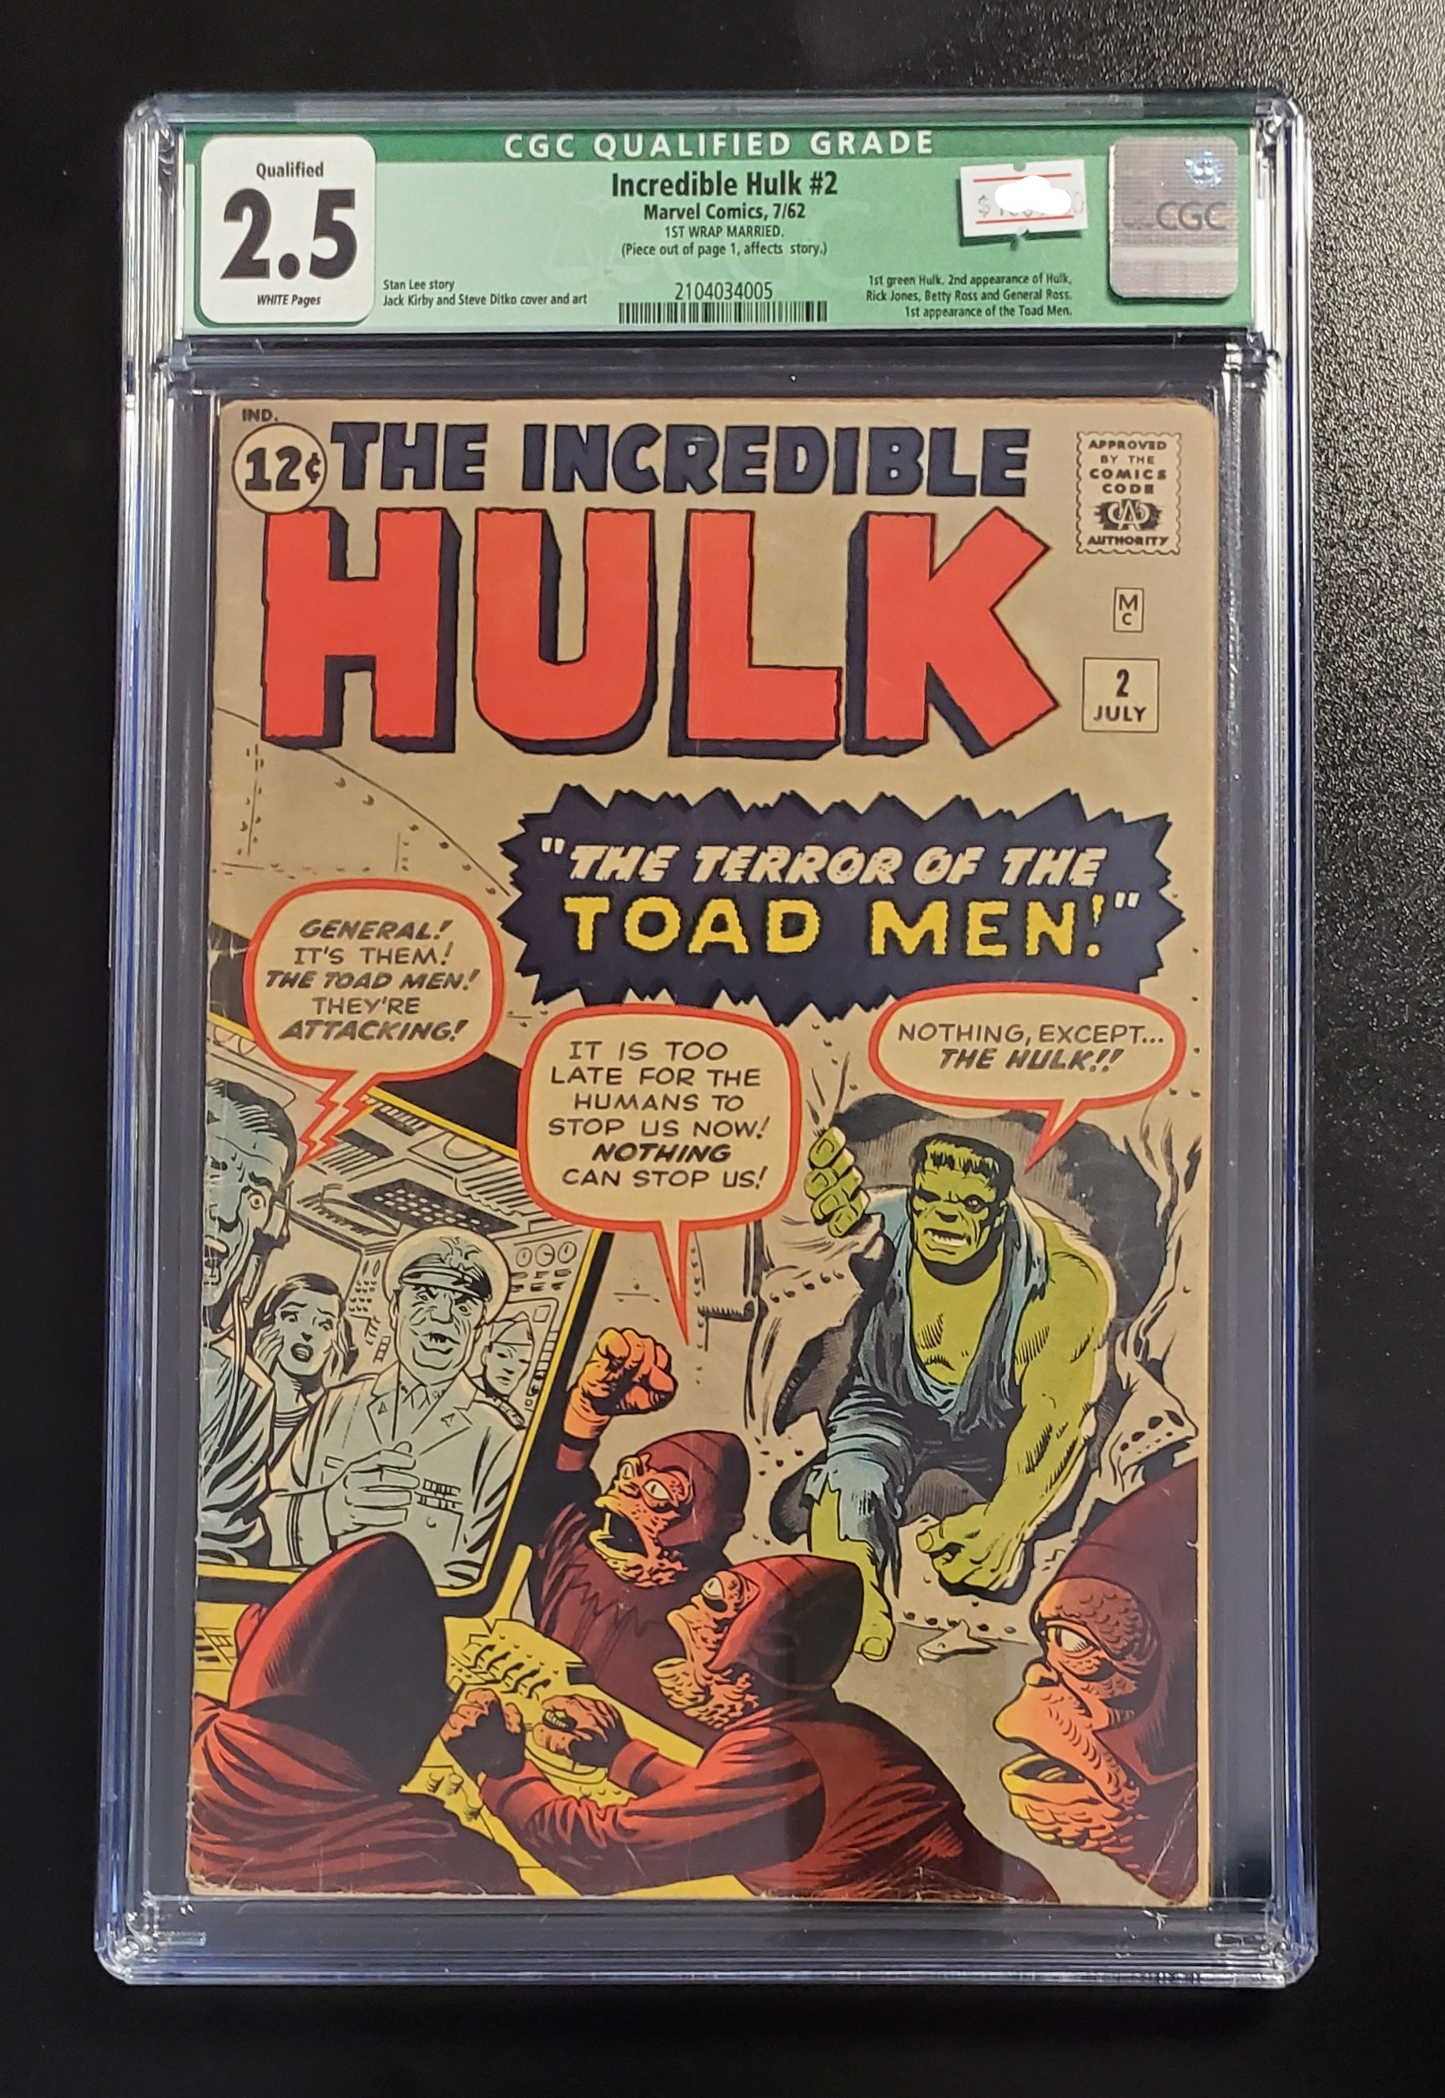 2.5 CGC GREEN LABEL Incredible Hulk #2 (1st Green Hulk) 1962